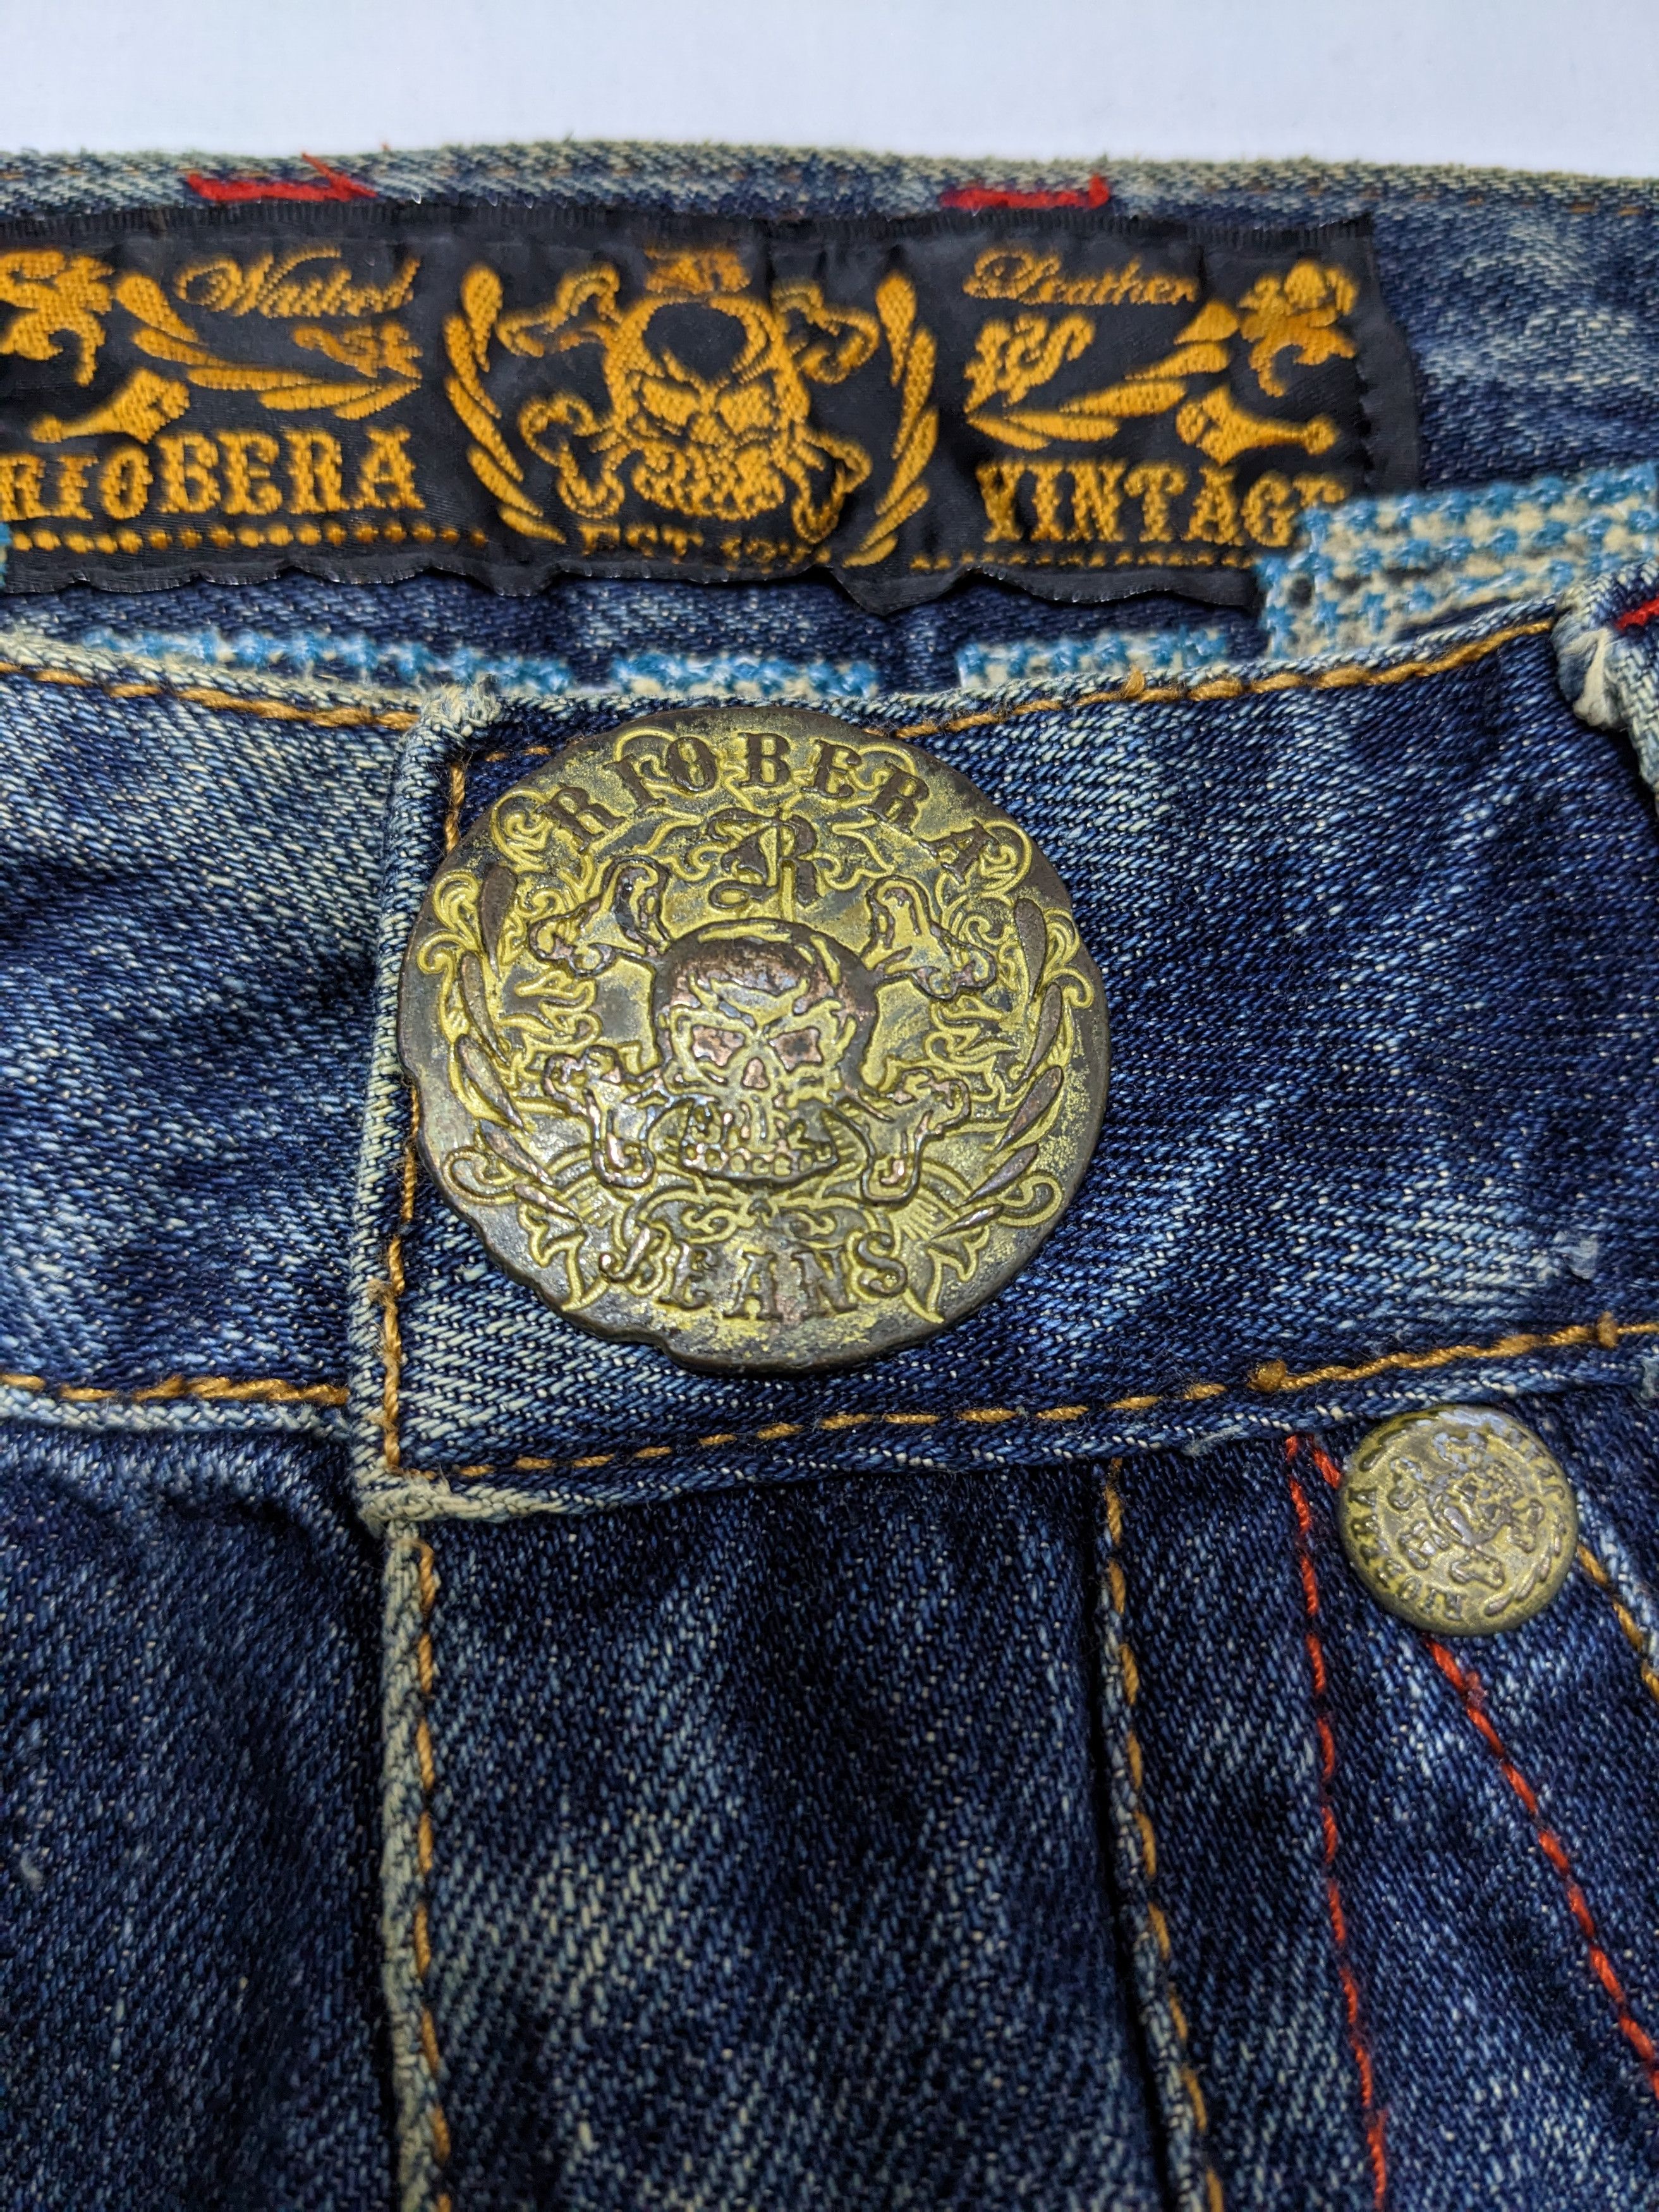 If Six Was Nine - Riobera Studded Zipper Flare Denim Wash Low Rise Jeans - 6